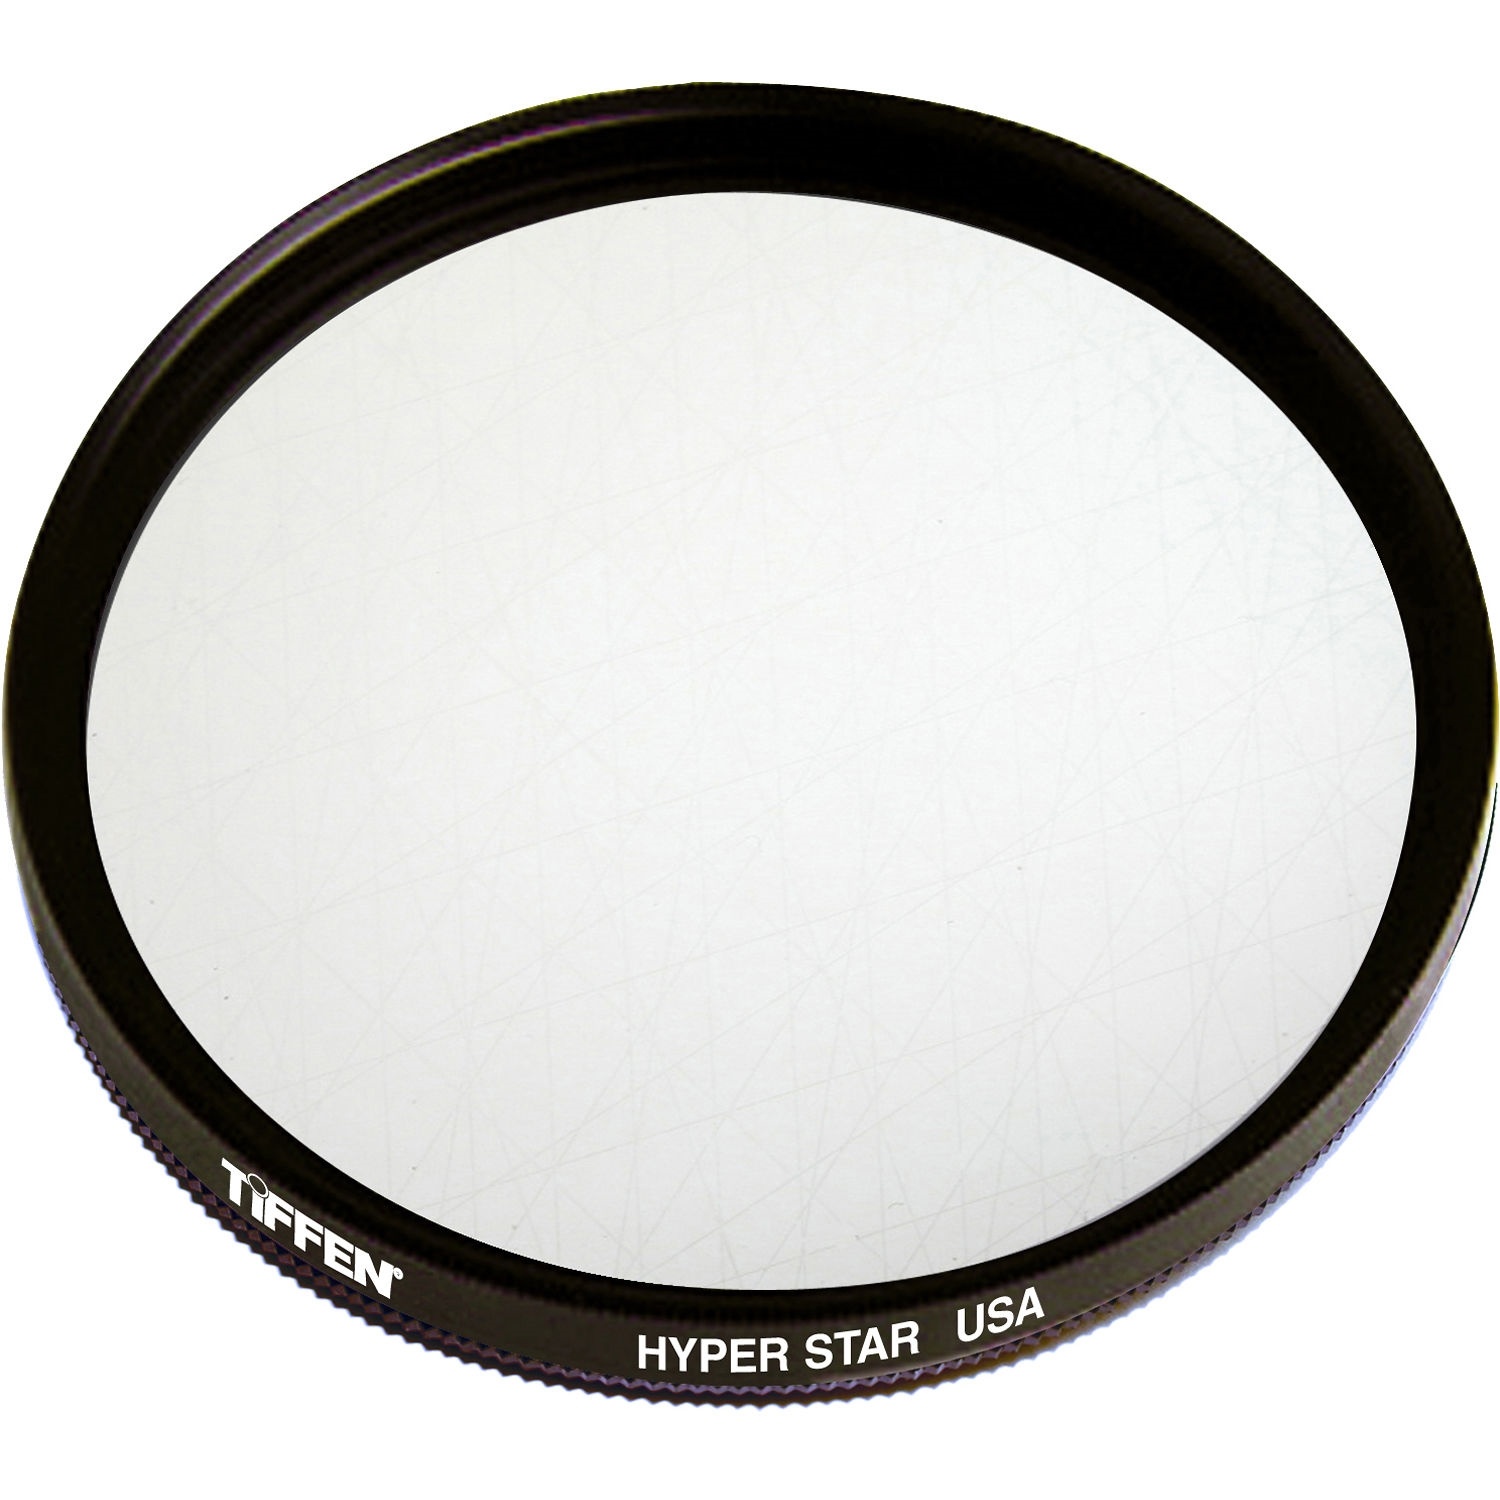 Tiffen 49mm Hyper Star Filter